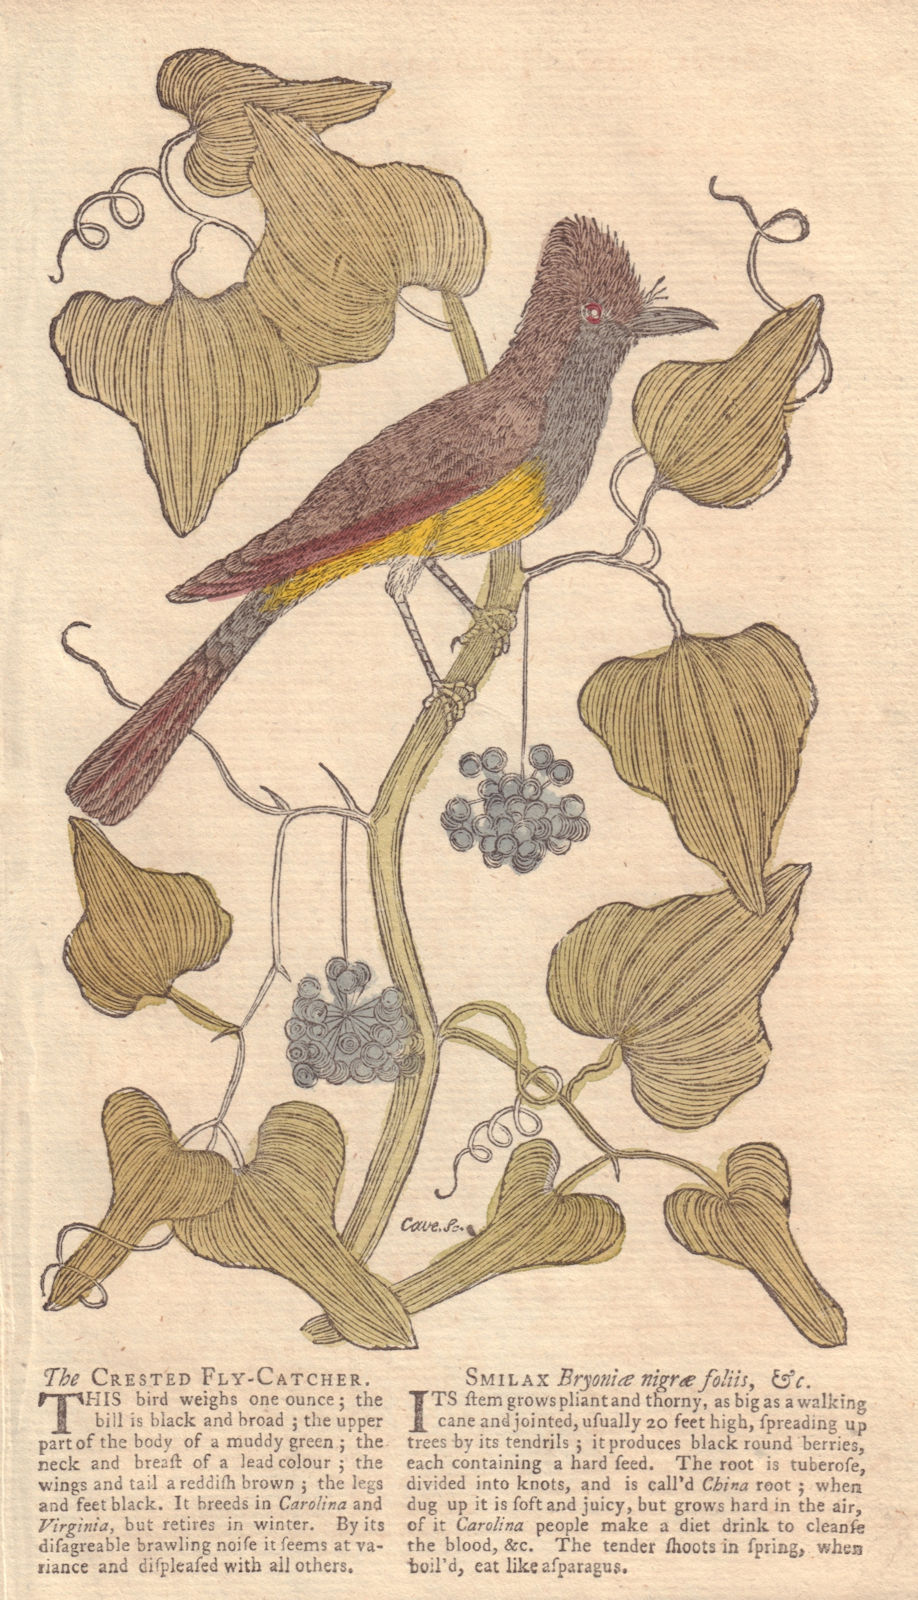 Crested Fly-Catcher. Smilax Bryonie nigre foliis Black Briony leaved Smilax 1752